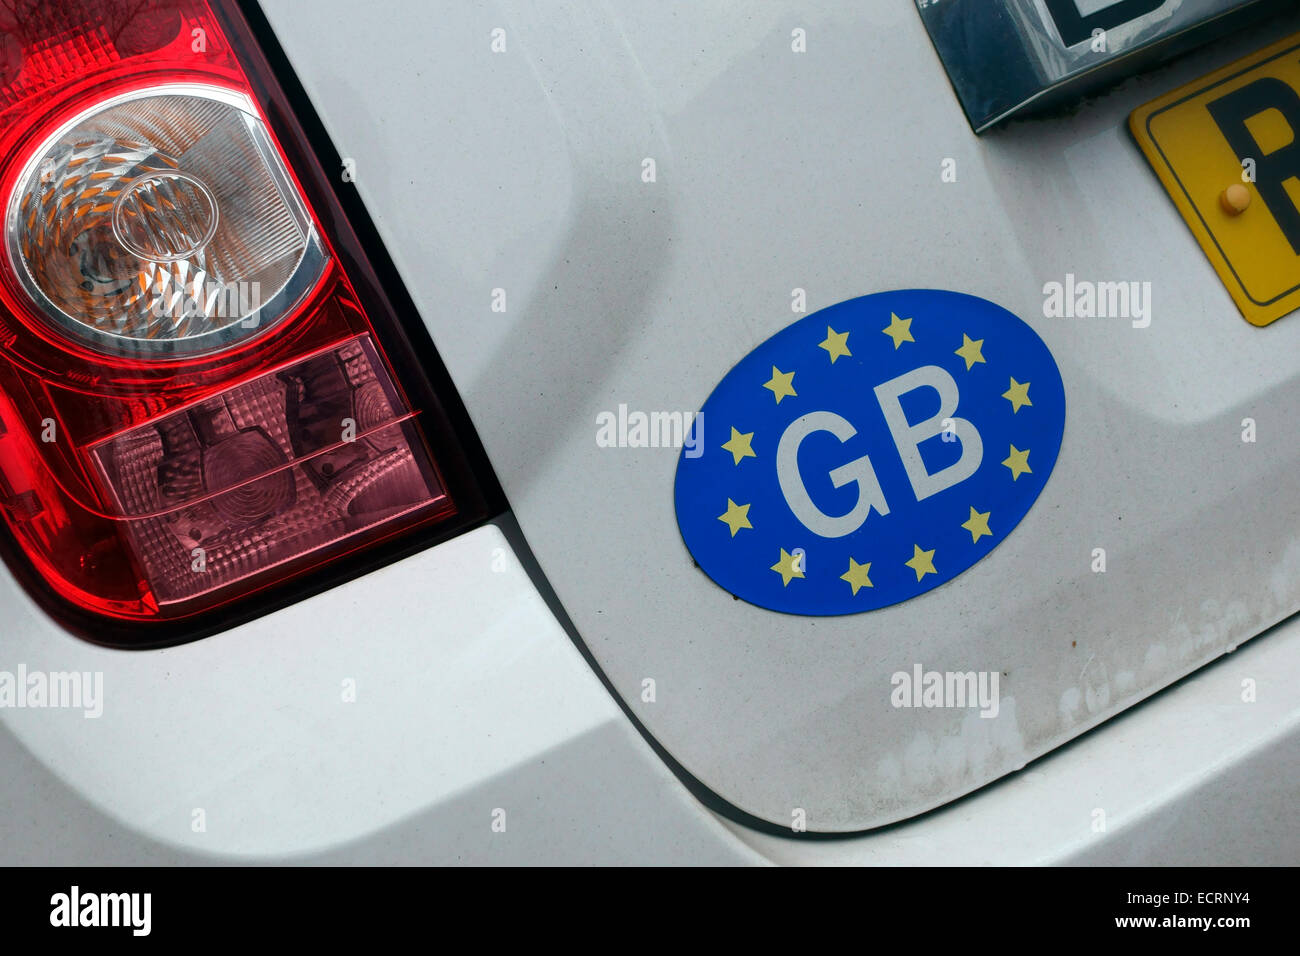 GB UE Europeo De Viaje Coche Camioneta Adhesivo Pegatina de placa insignias Azul Francia España 